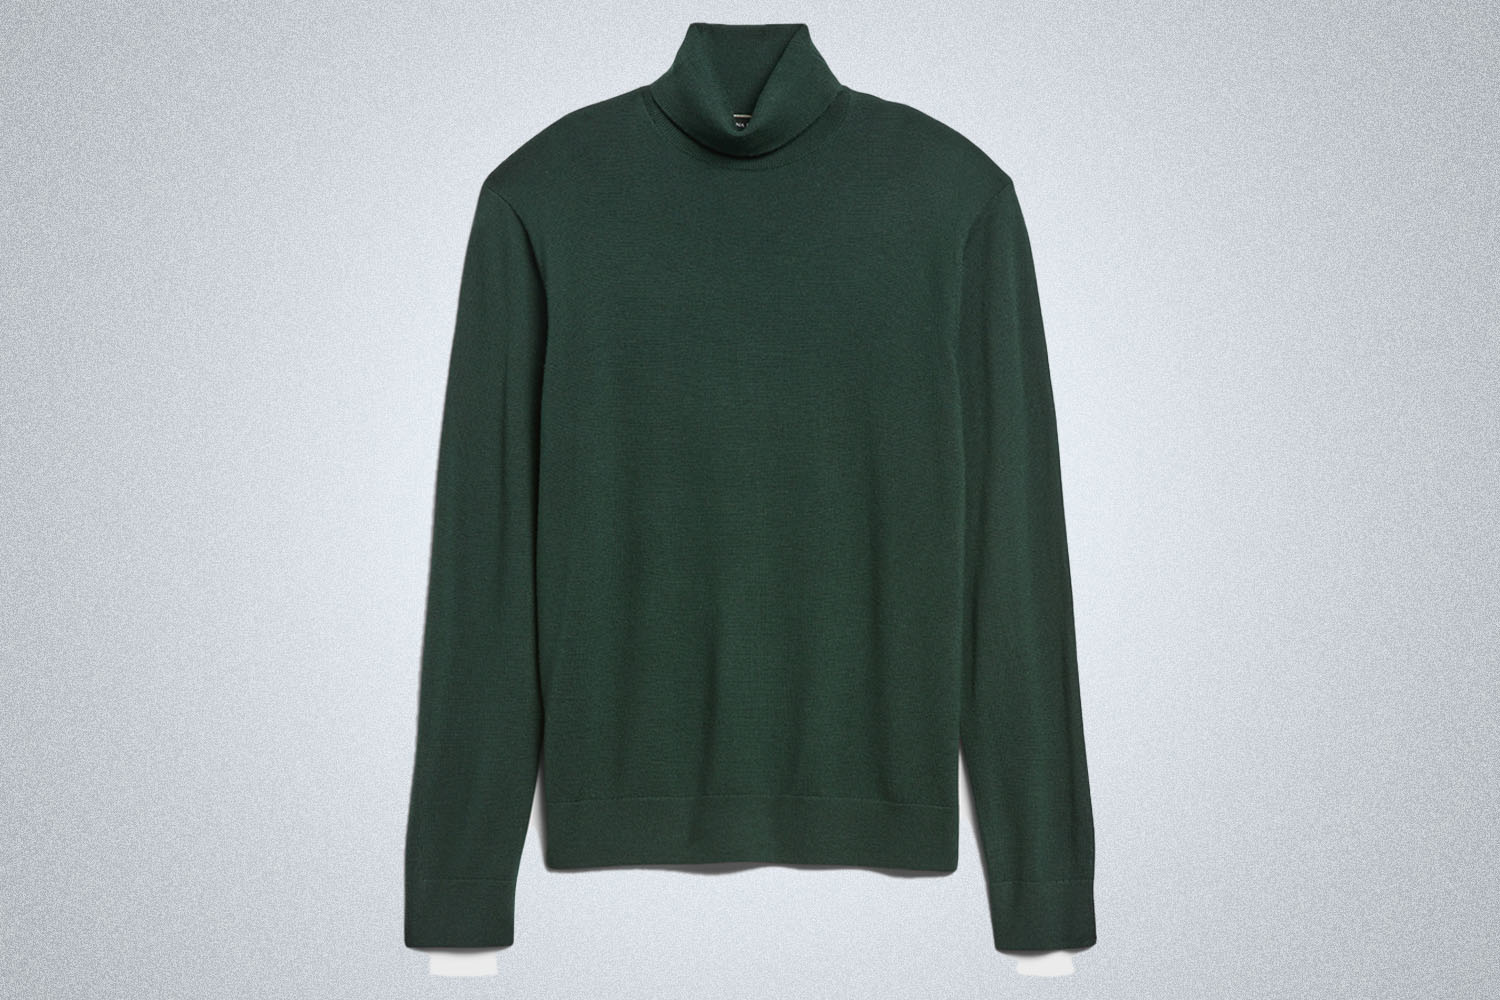 a green turtleneck sweater 